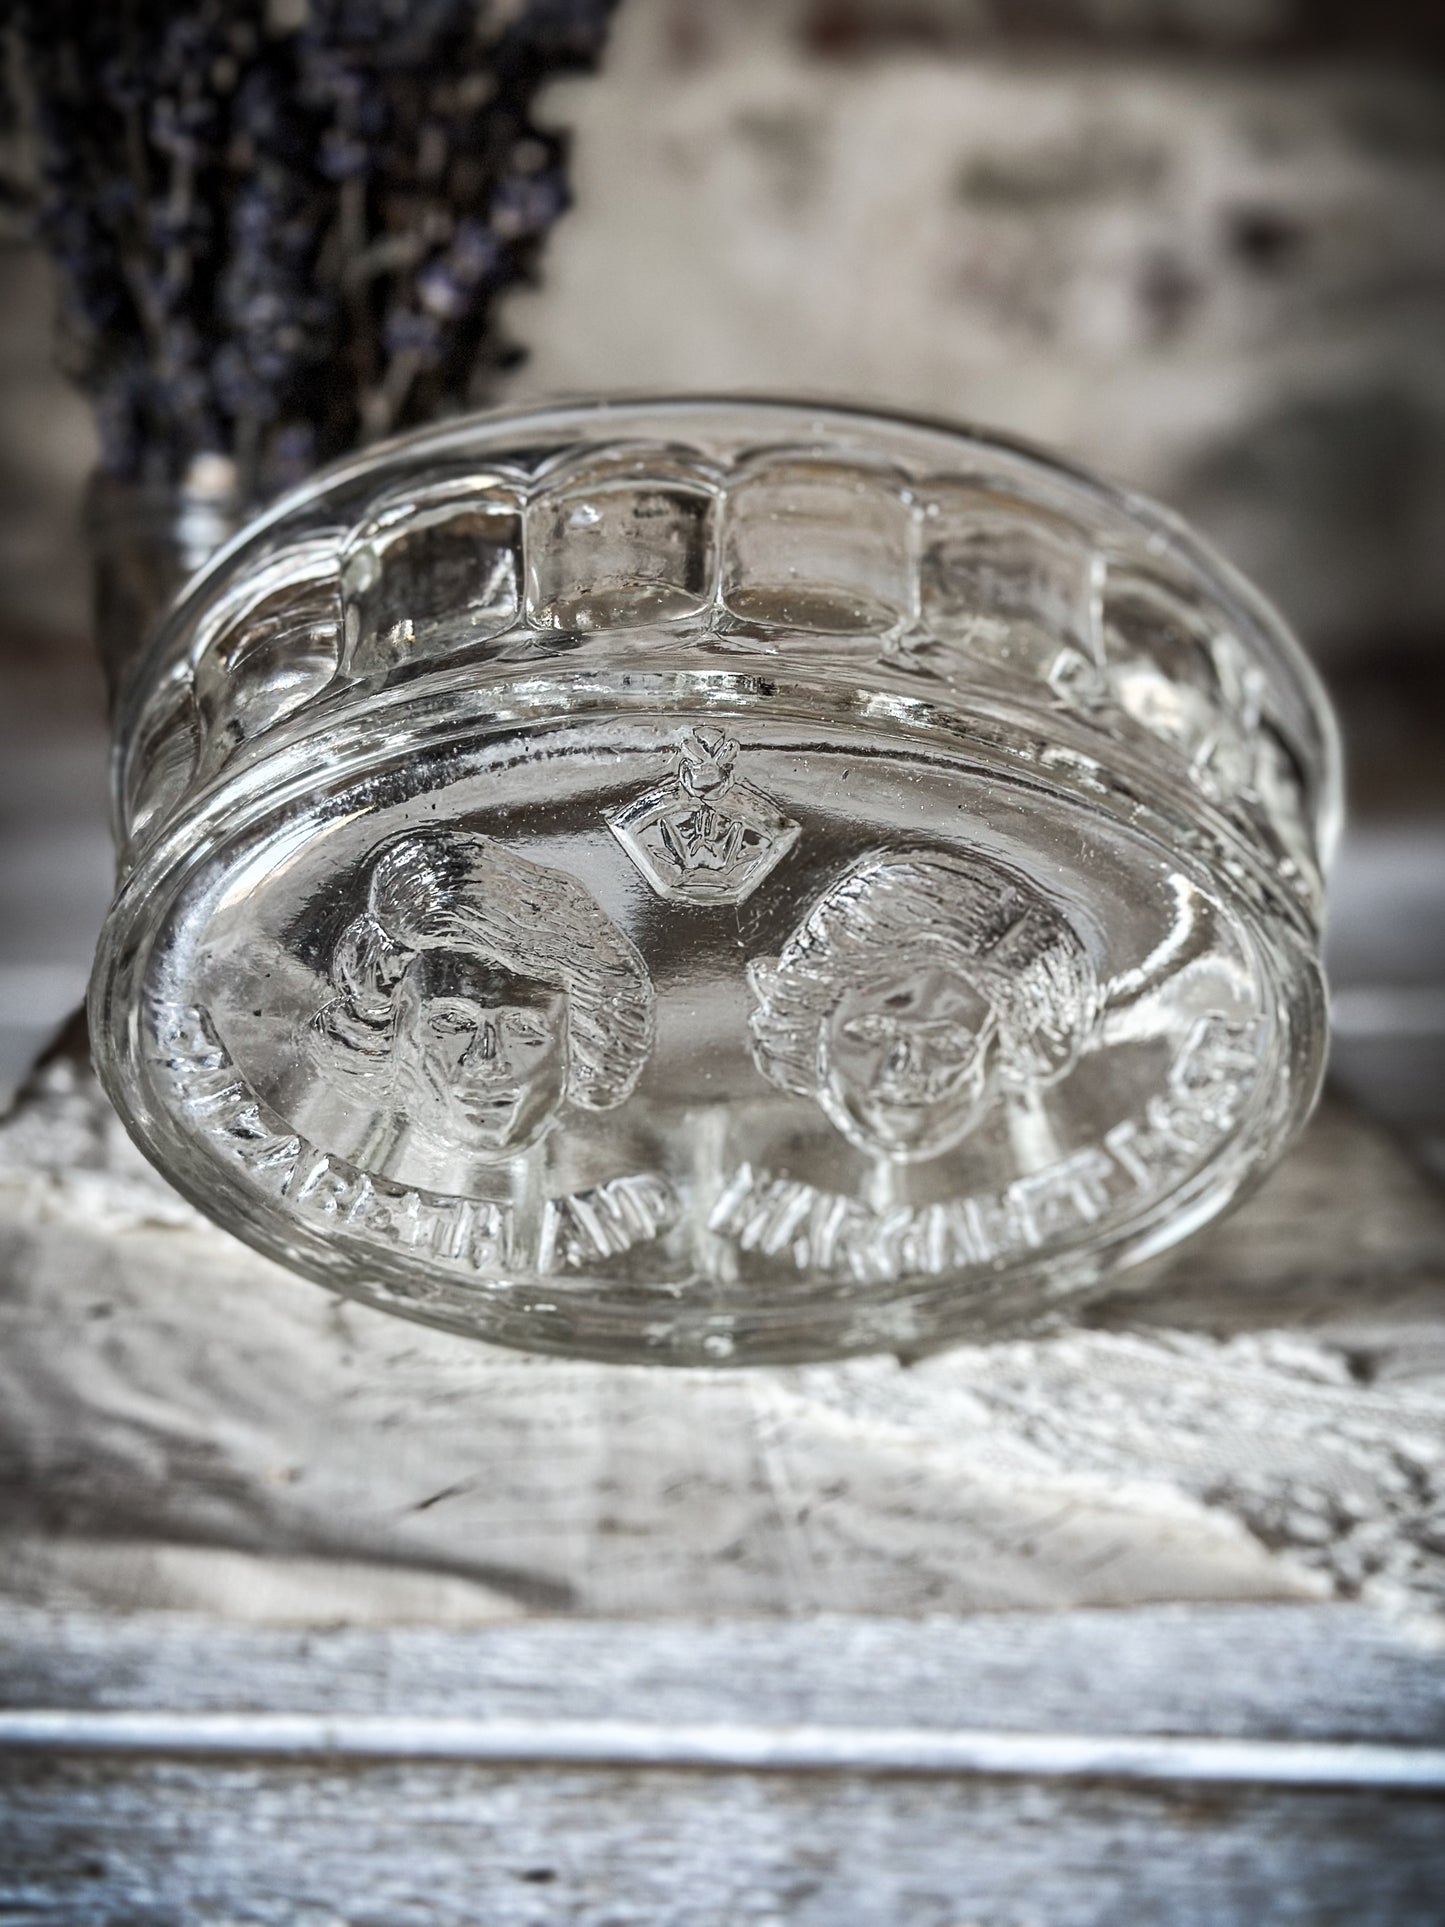 Elizabeth and Margaret Rose Royal memorabilia glass jelly mould -The Queen Elizabeth II